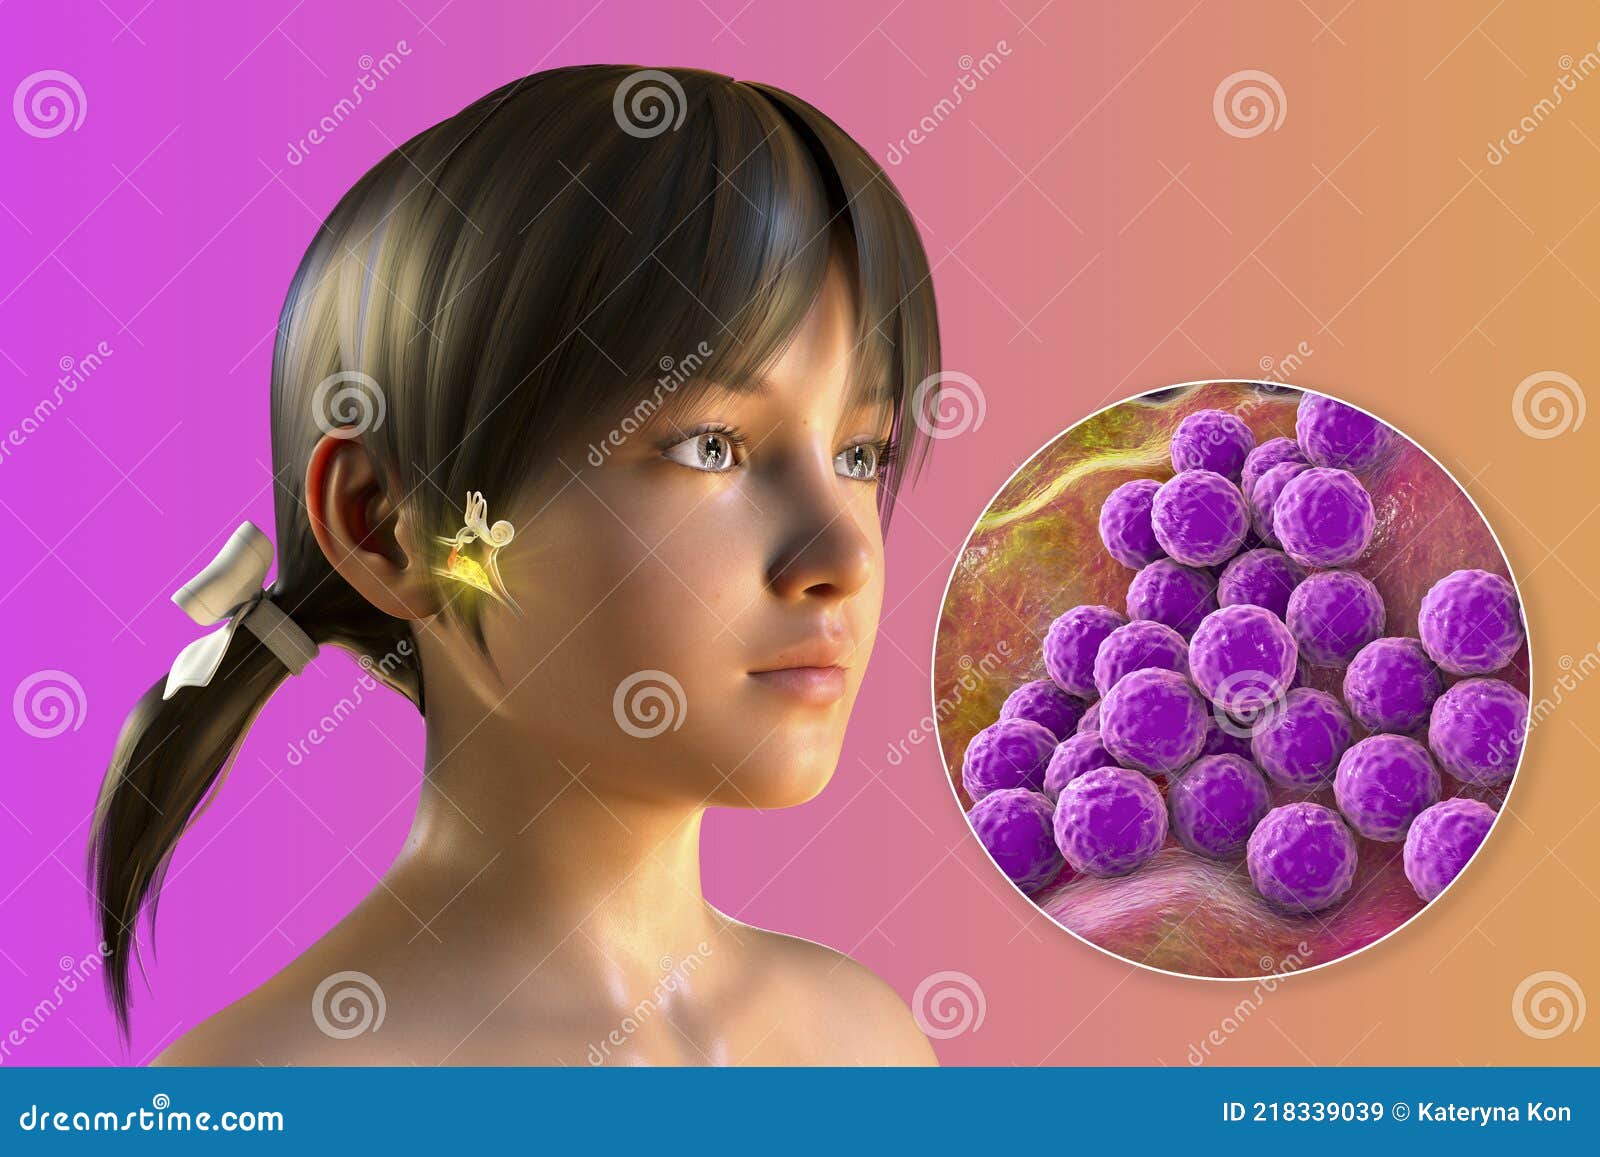 Staphylococcus Aureus Bacterium As A Cause Of Otitis Media Stock Illustration Illustration Of 